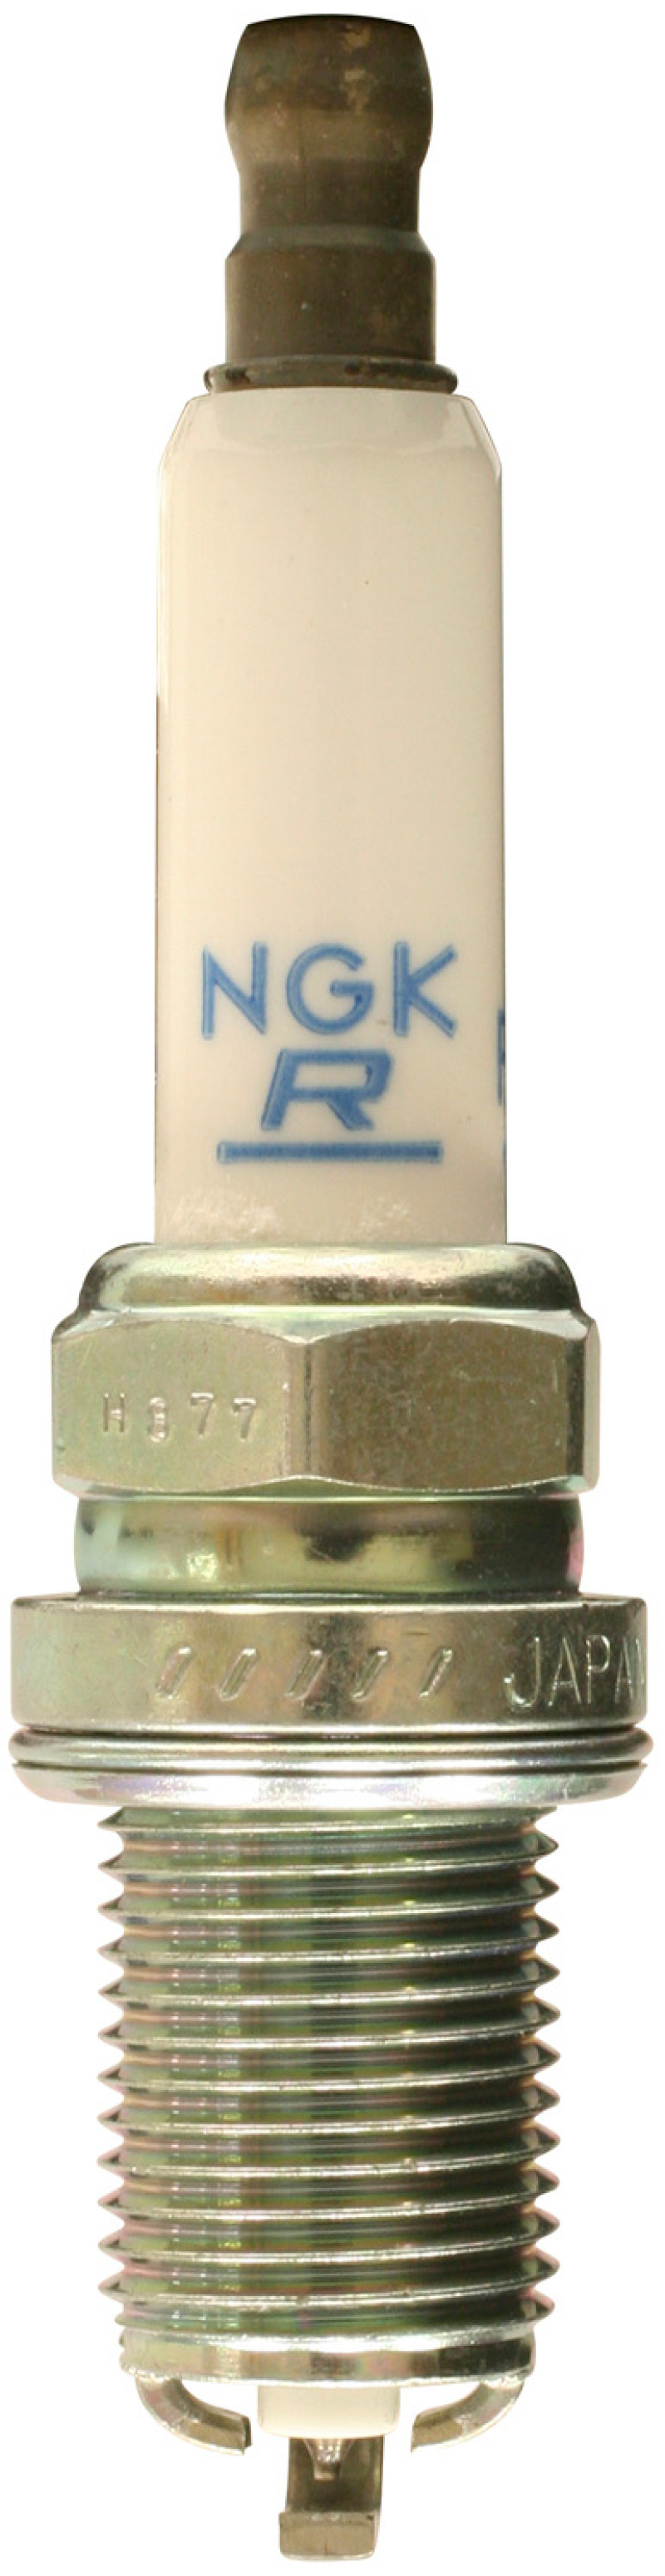 NGK Multi-Ground Spark Plug Box of 4 (PFR6W-TG) - 5547